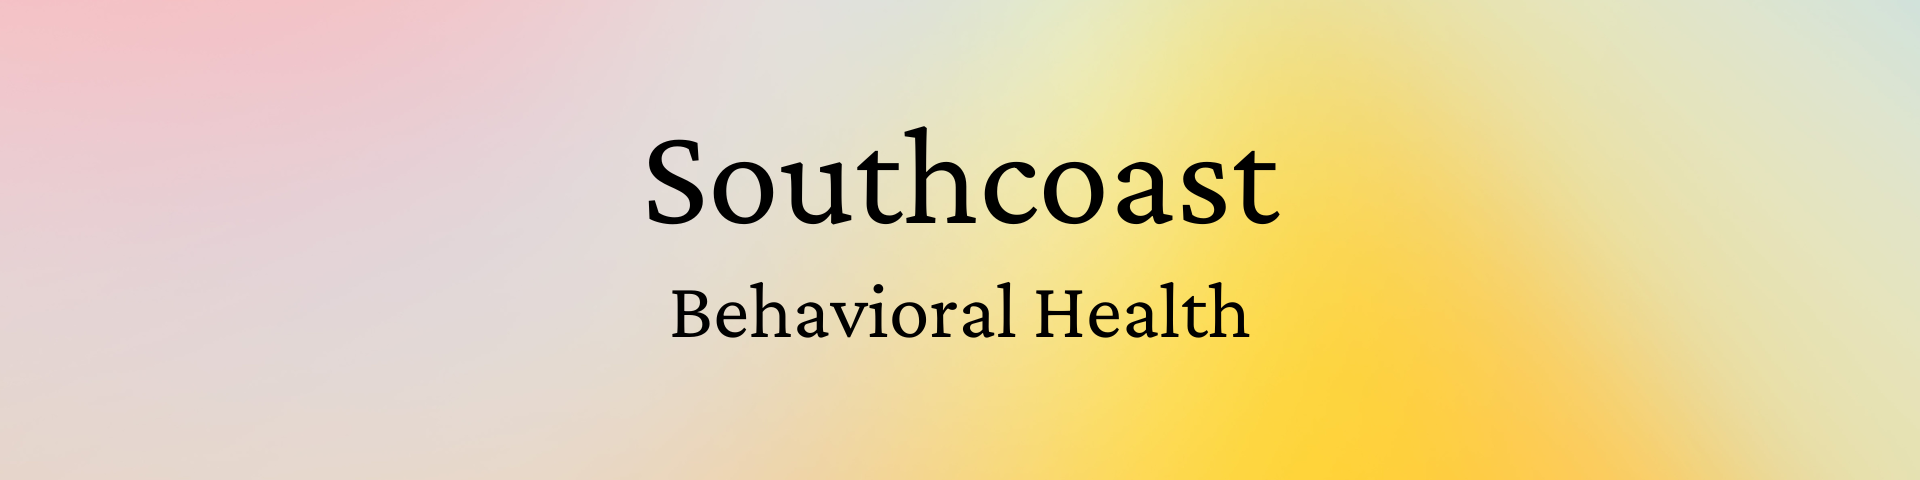 Southcoast Behavioral Health (link)